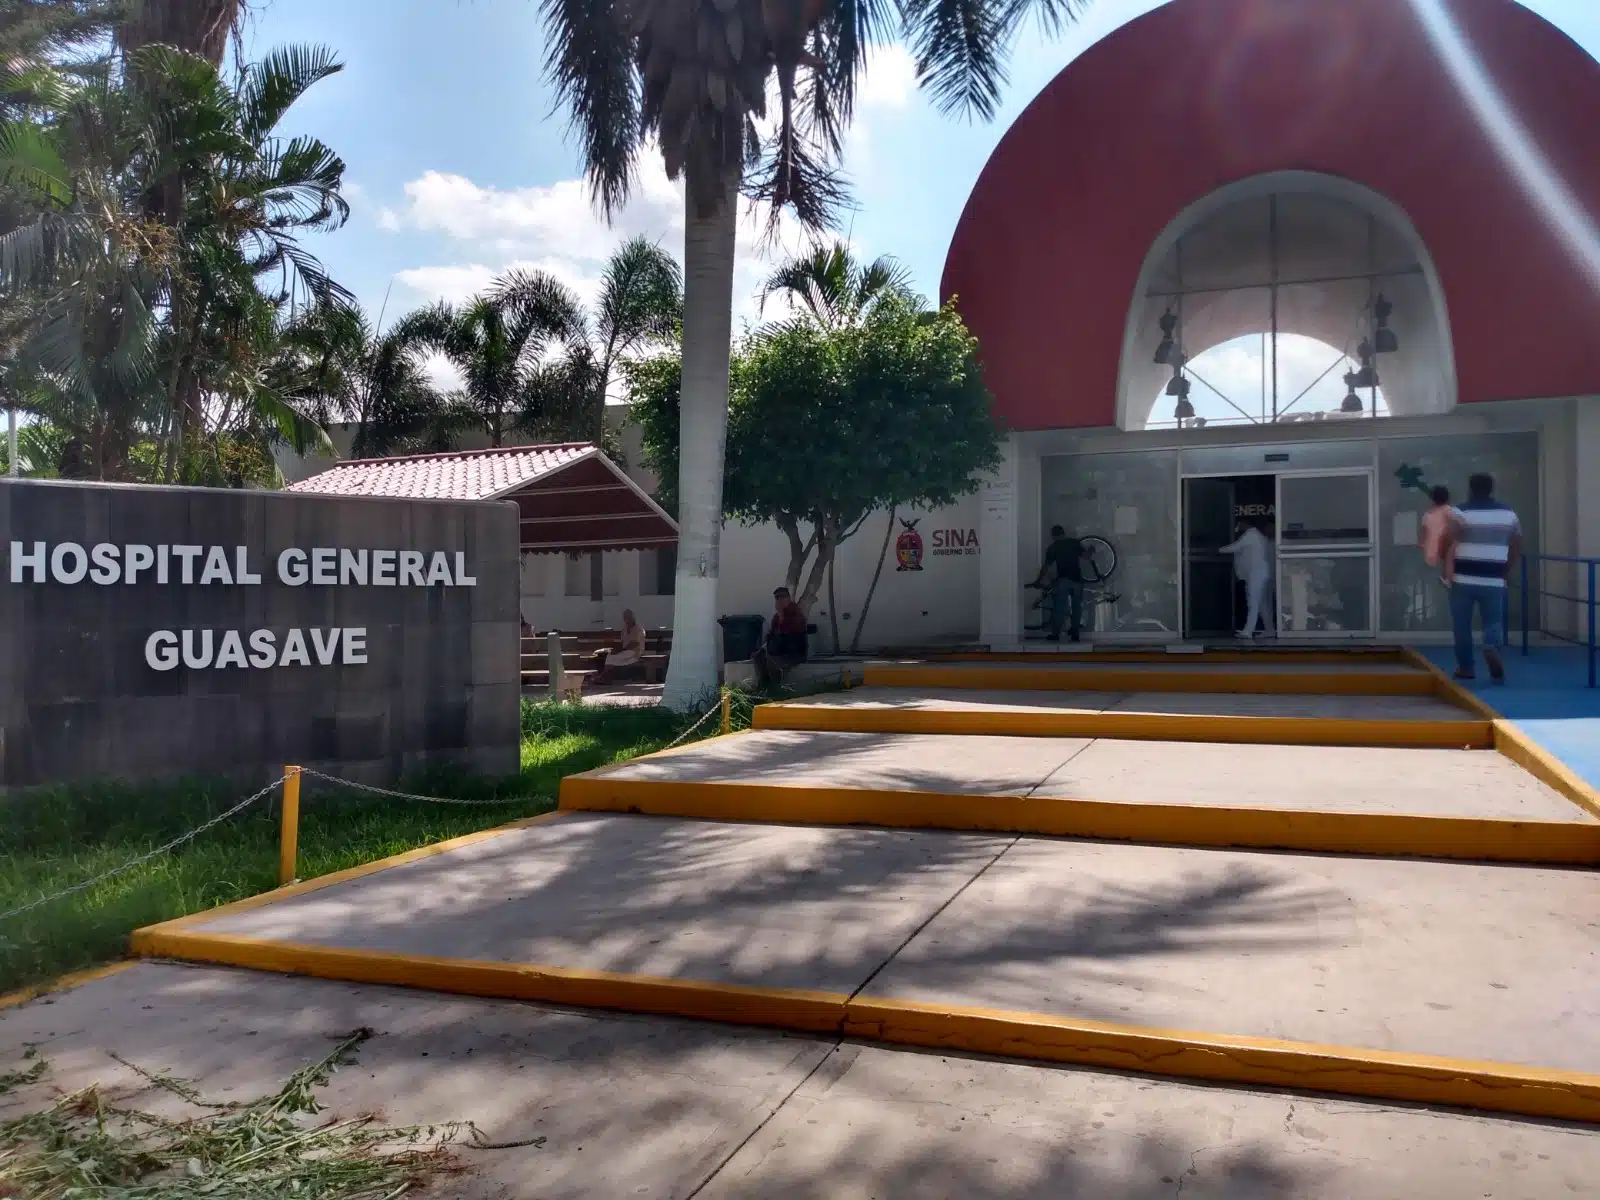 Hospital General Guasave